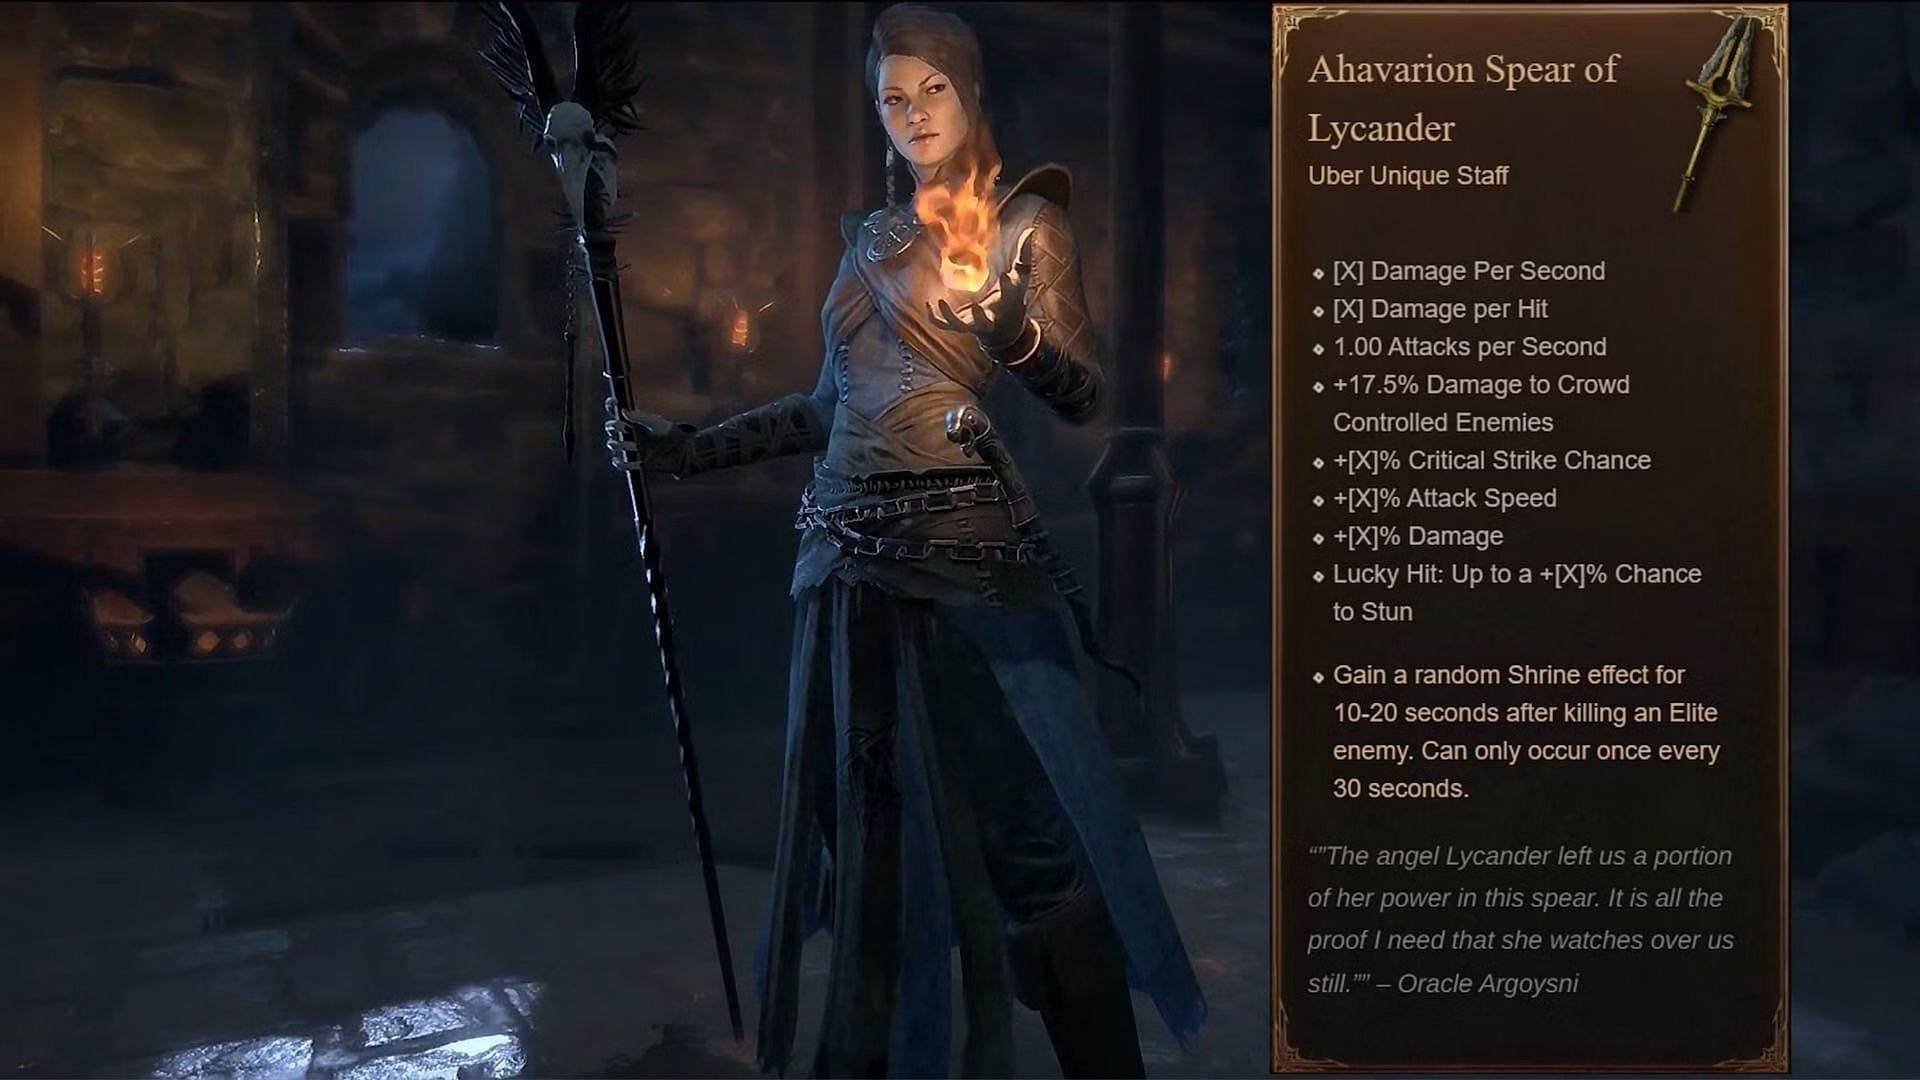 Ahavarion, Spear of Lycander in Diablo (Image via Blizzard Entertainment)